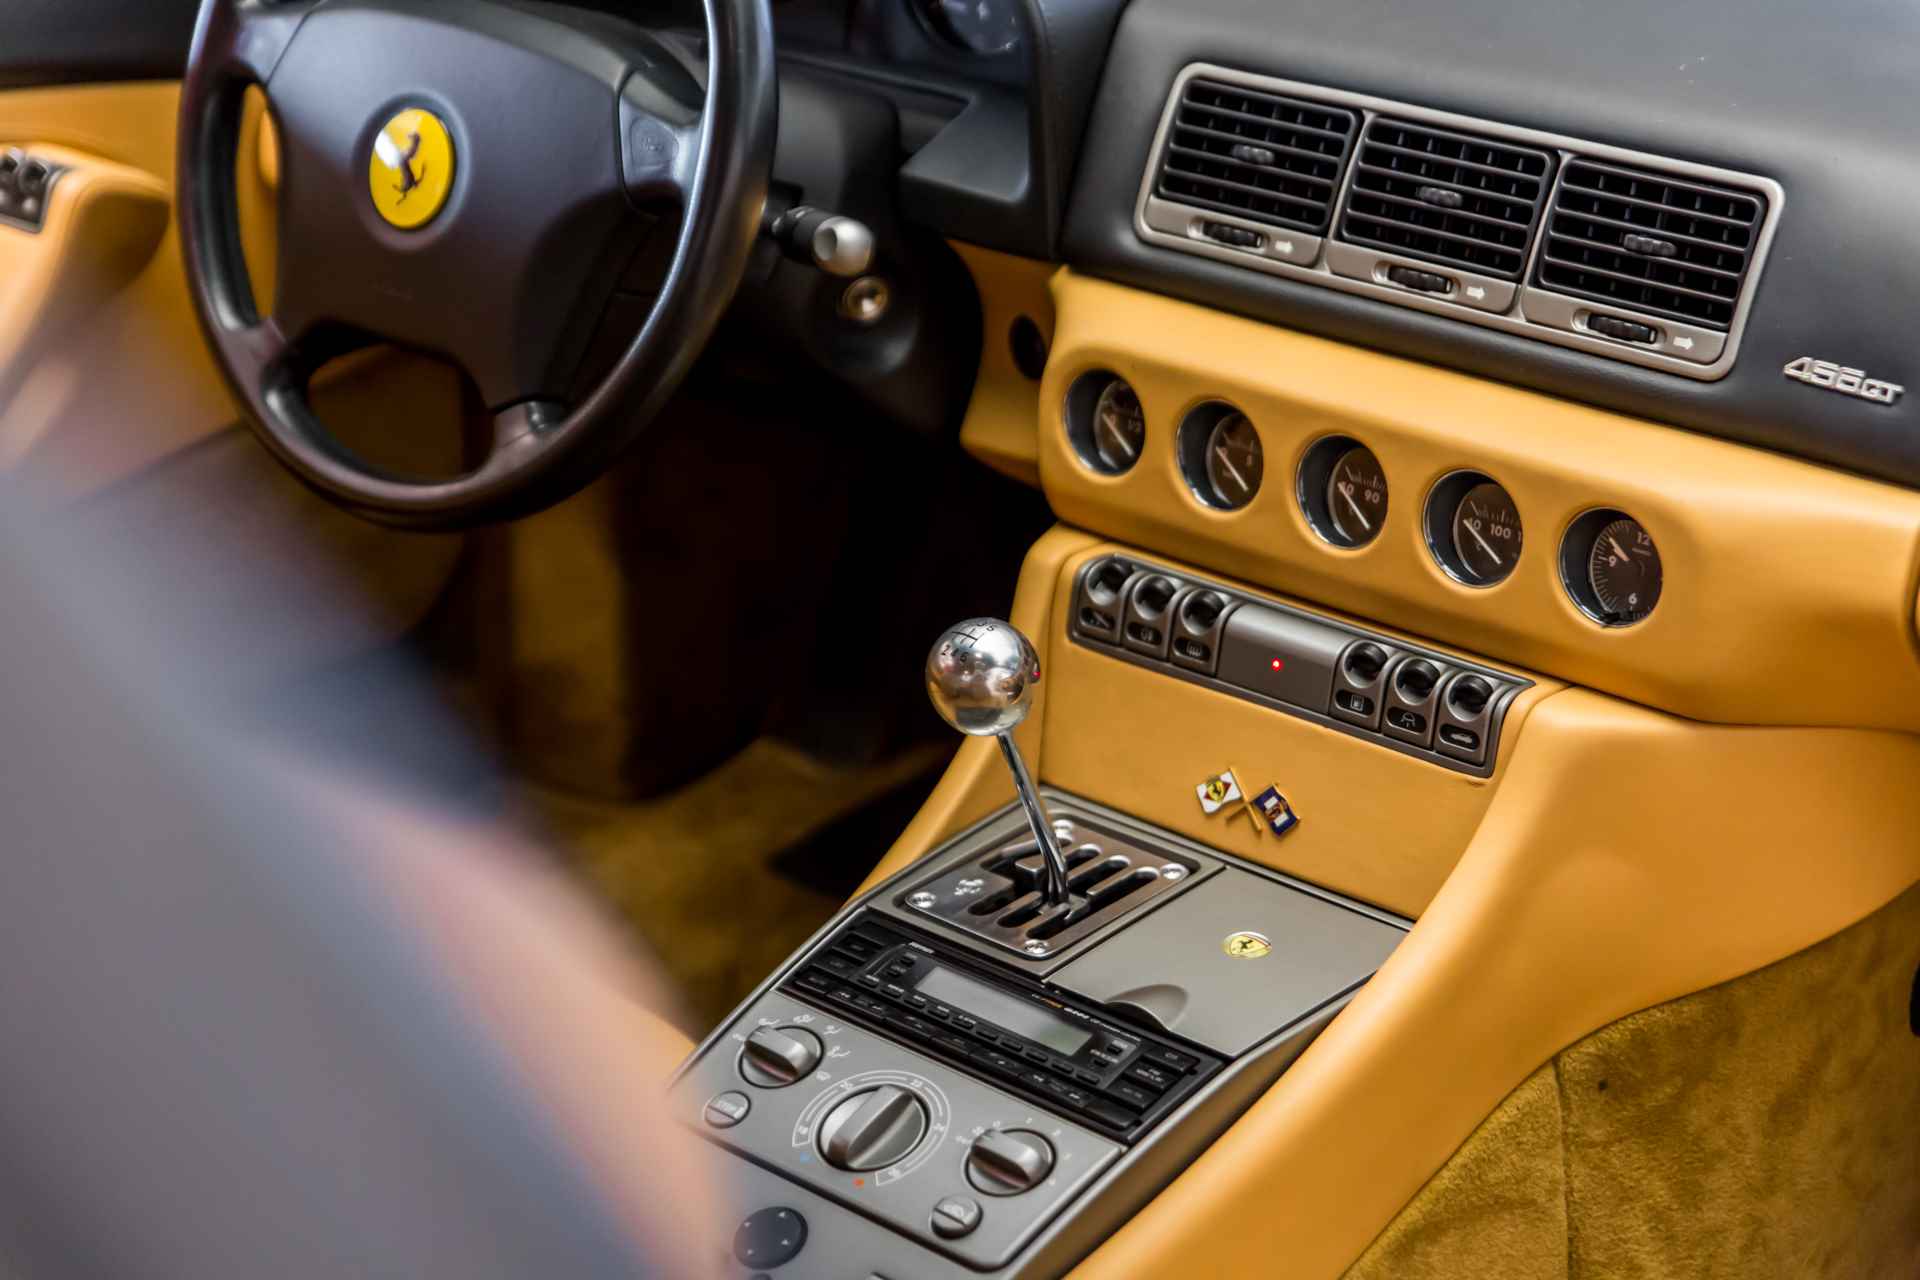 Ferrari 456 GT ~Ferrari Munsterhuis~ - 8/28